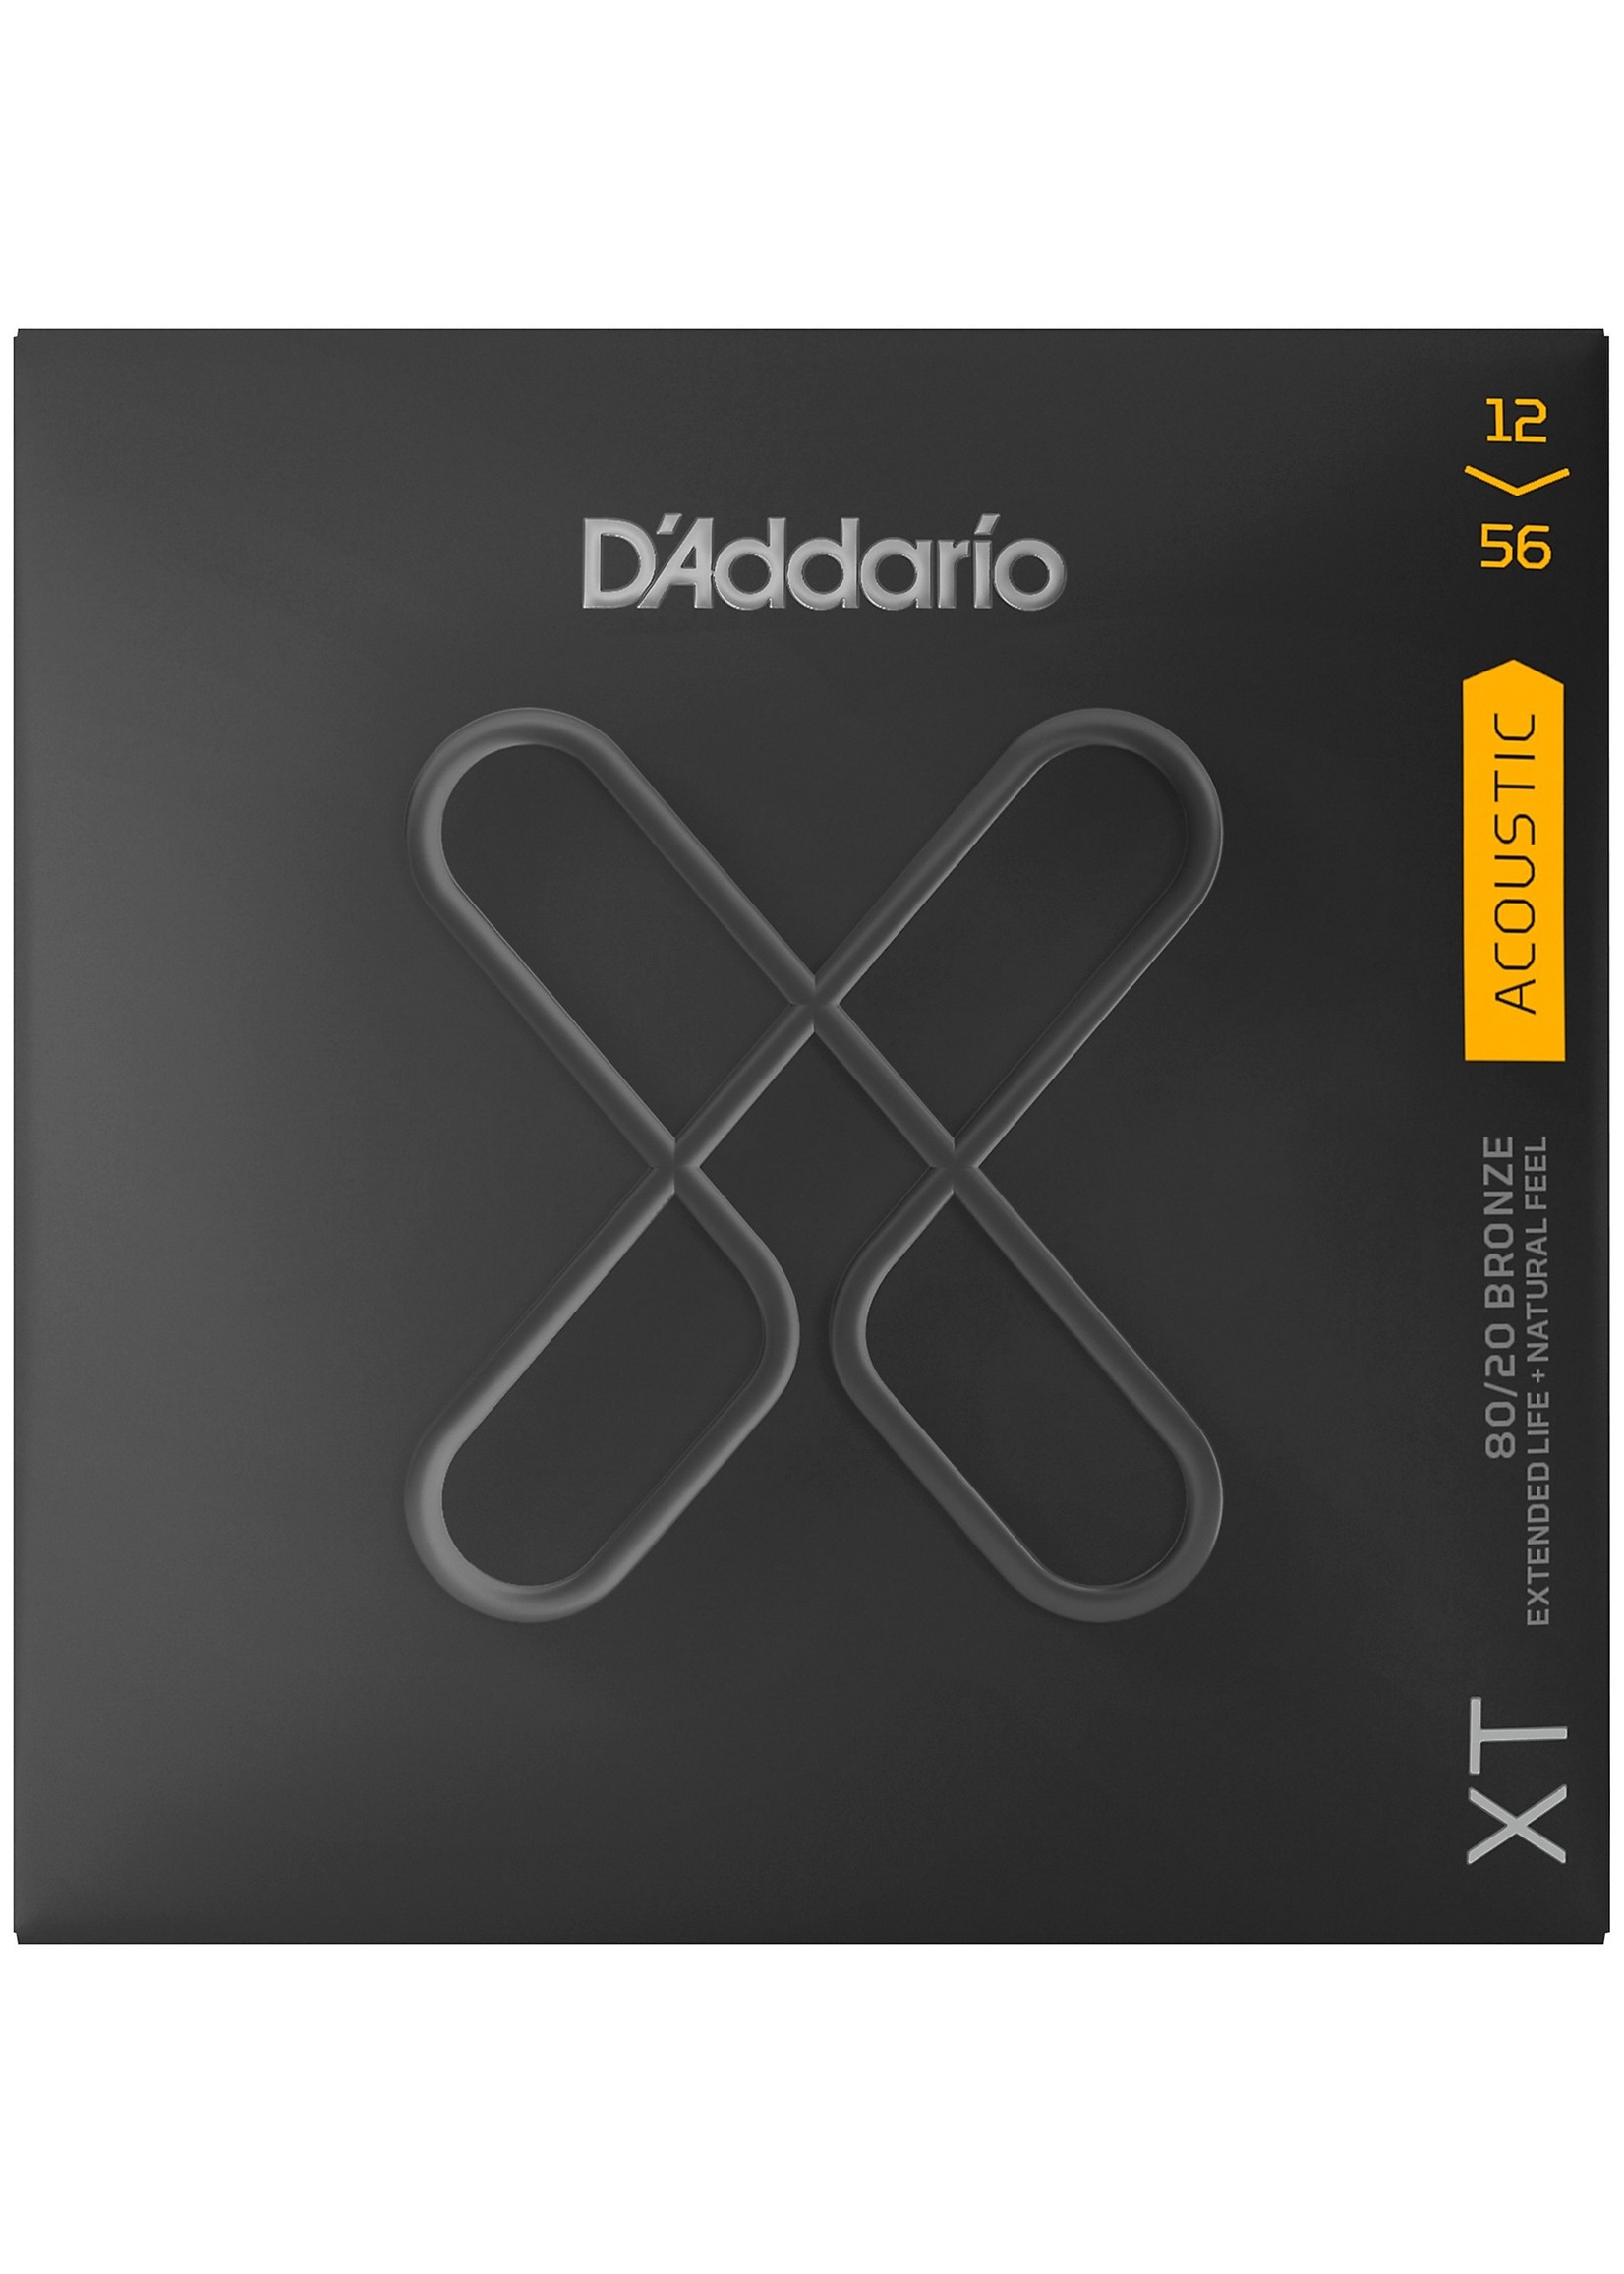 D'Addario D'Addario XT 80/20 Bronze 12/56- LT Top/MED Bottom Acoustic Guitar Strings